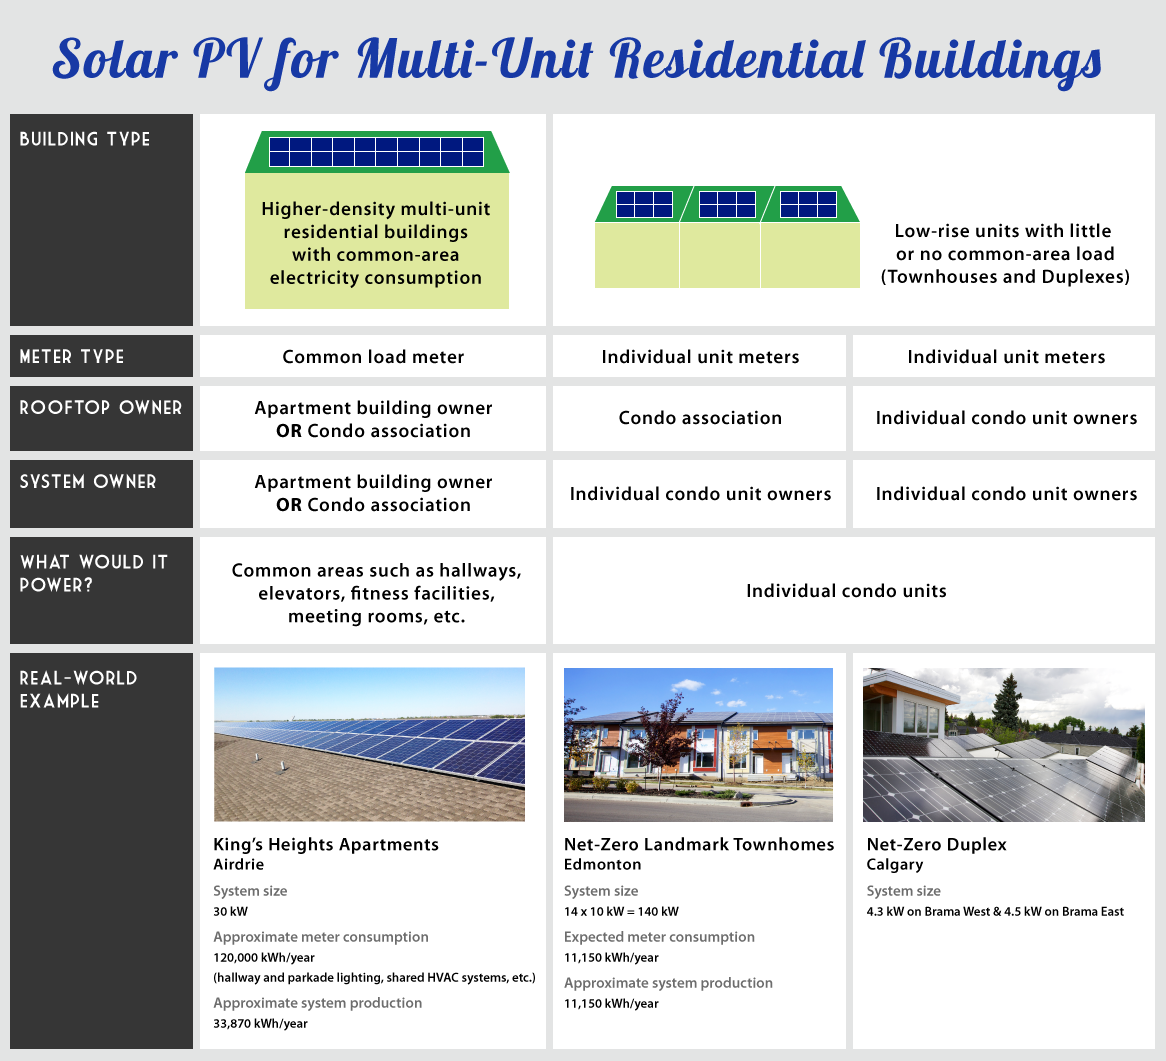 Solar PV for Multi-Unit Residential Buildings